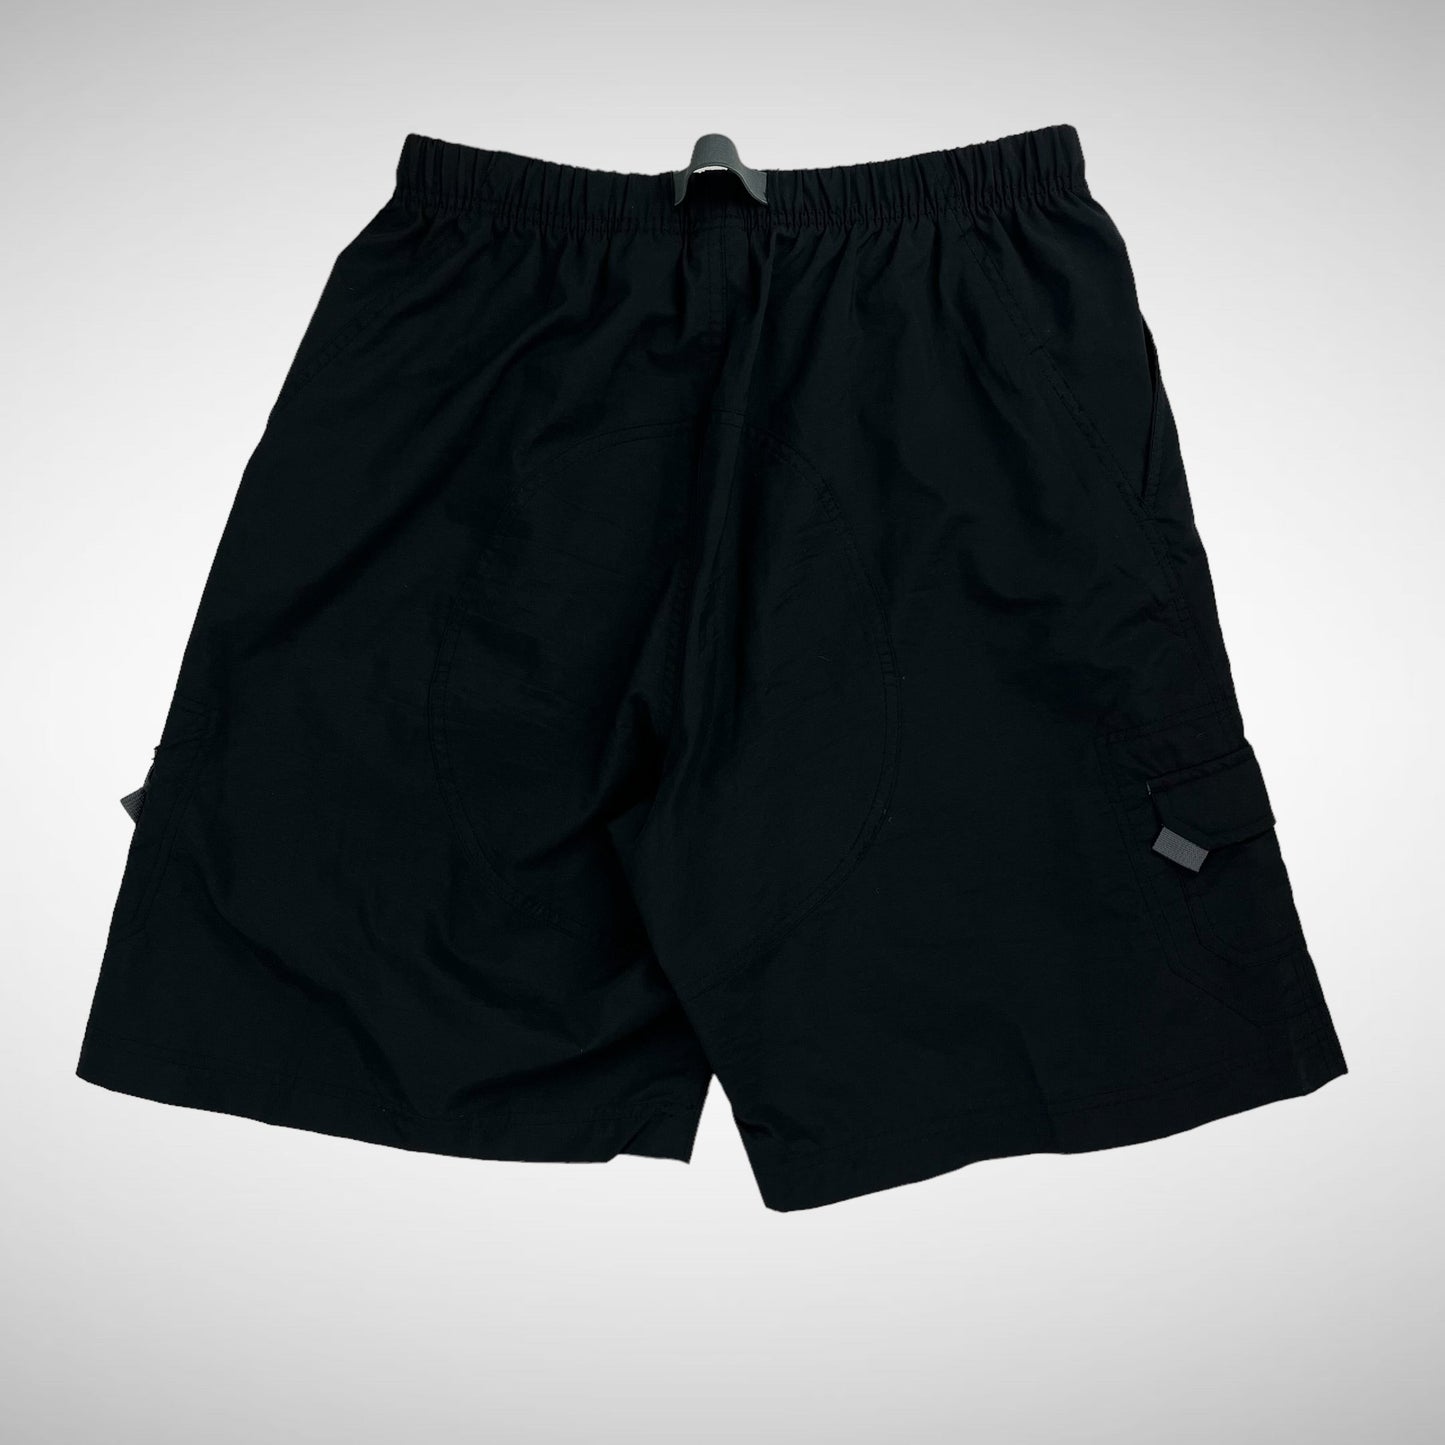 Nike ACG Tactical Shorts (90s)